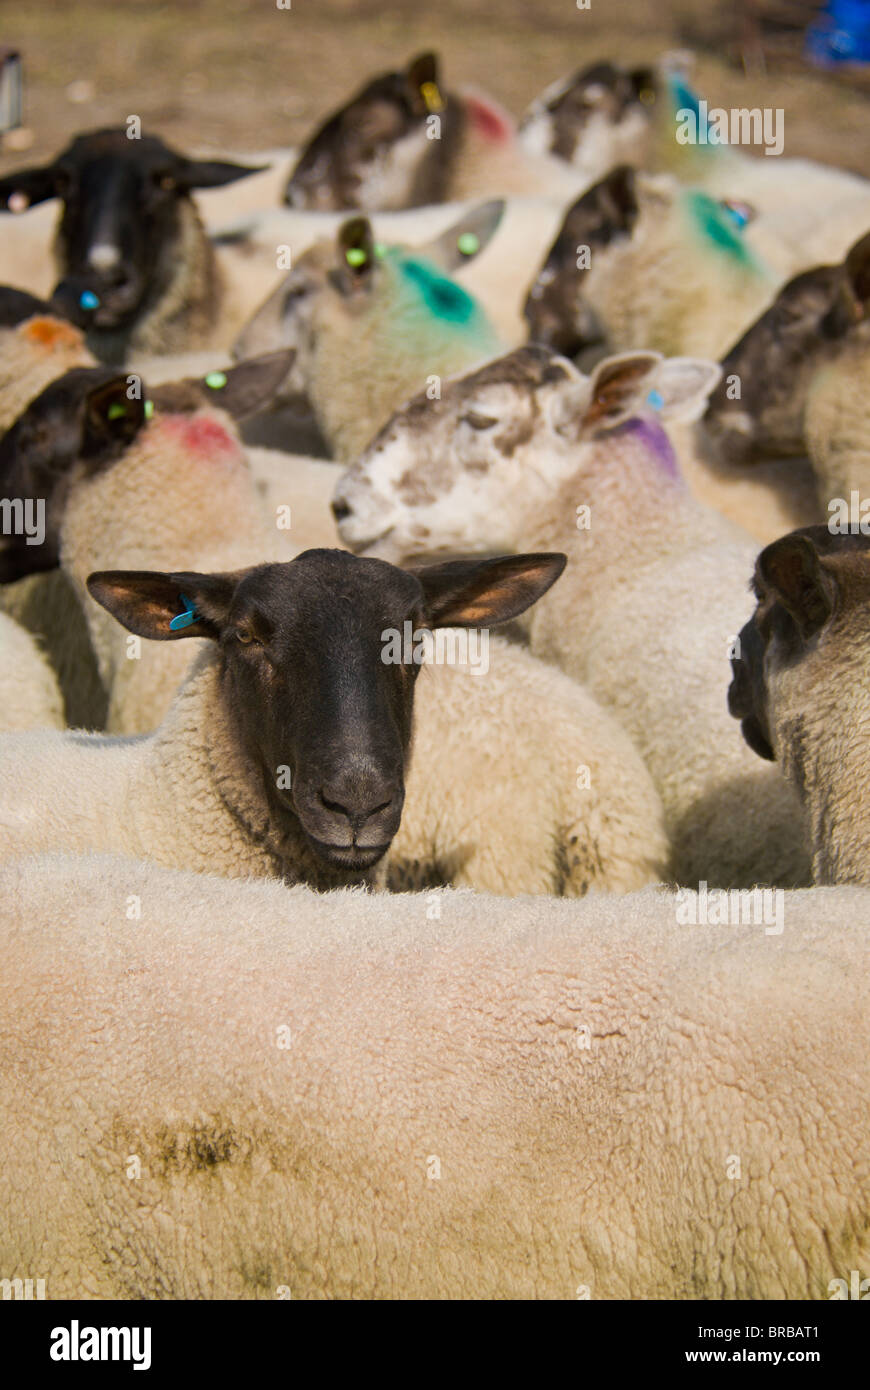 Sheep in pen Stock Photo